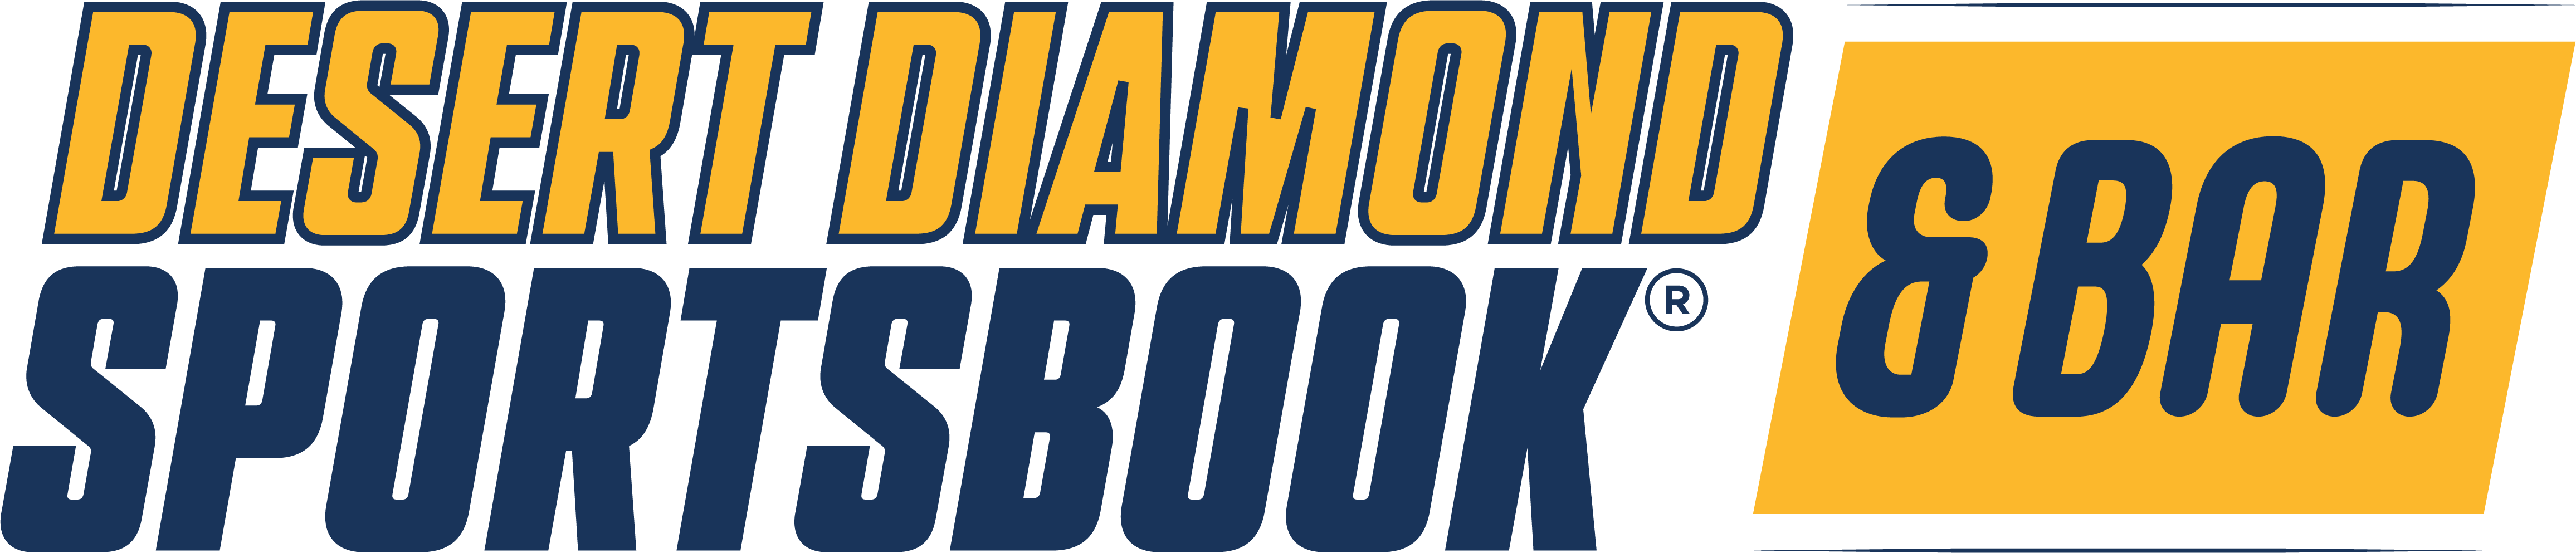 desert diamond sportsbook & bar logo